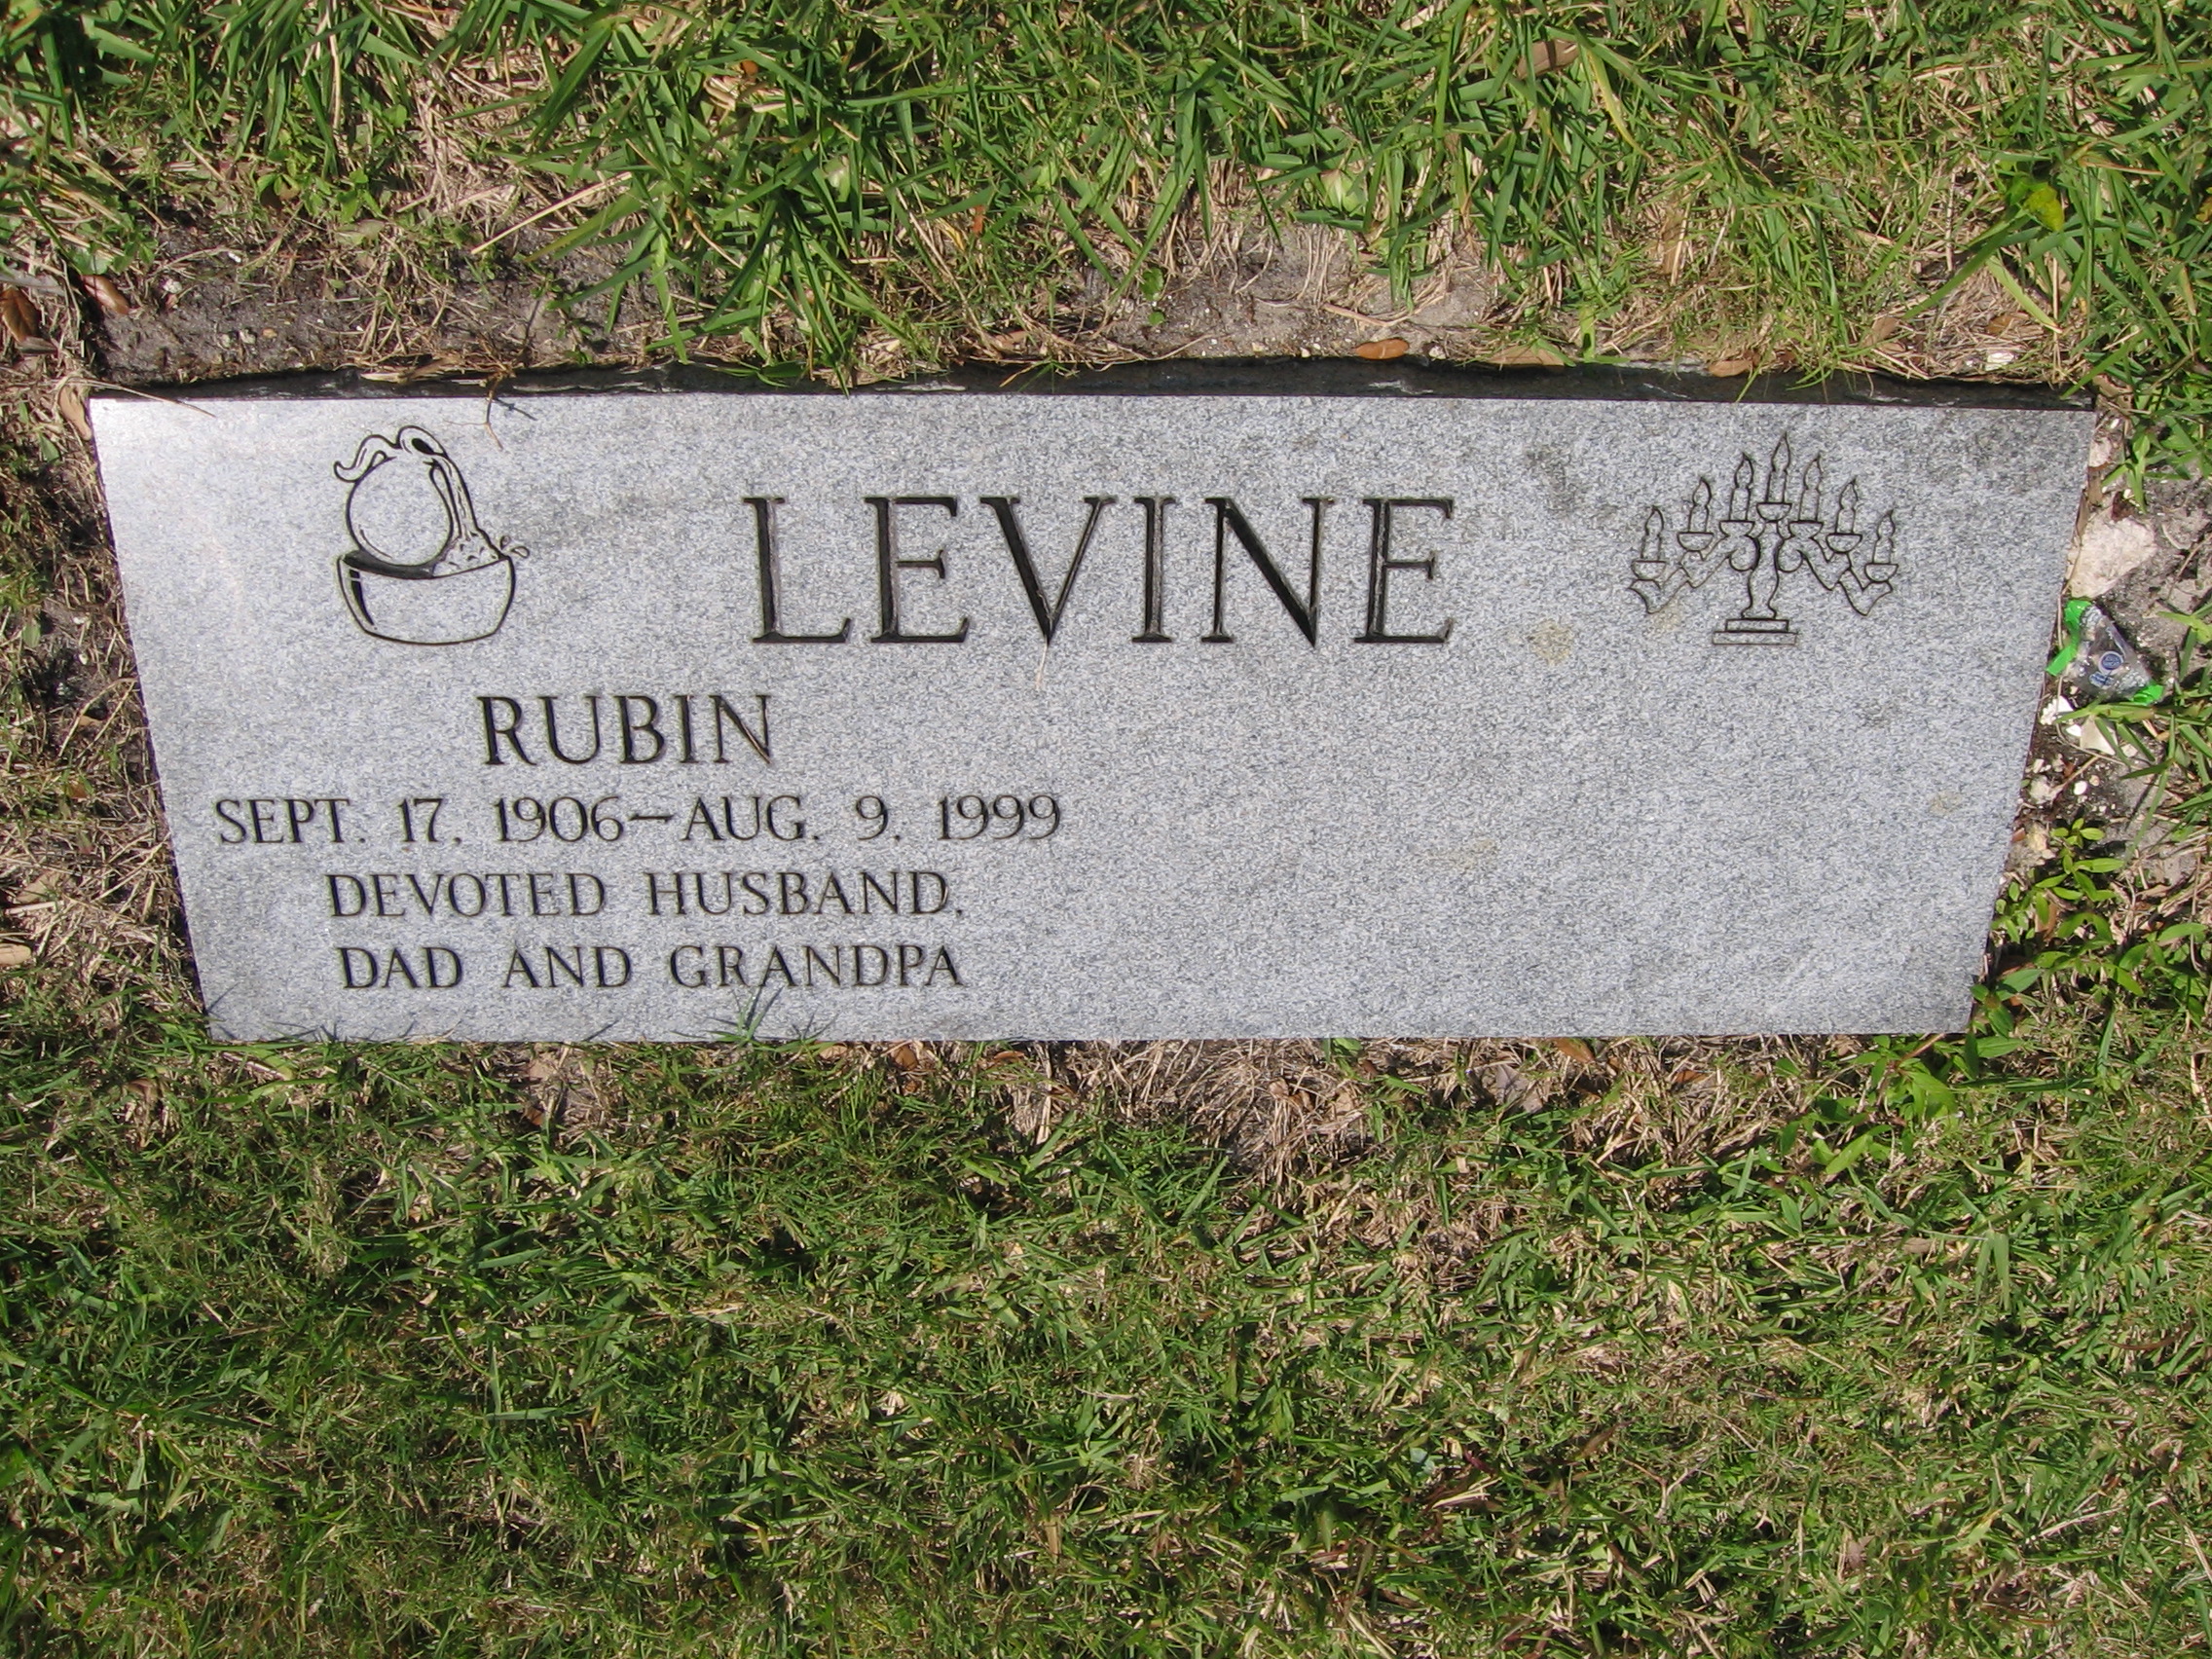 Rubin Levine